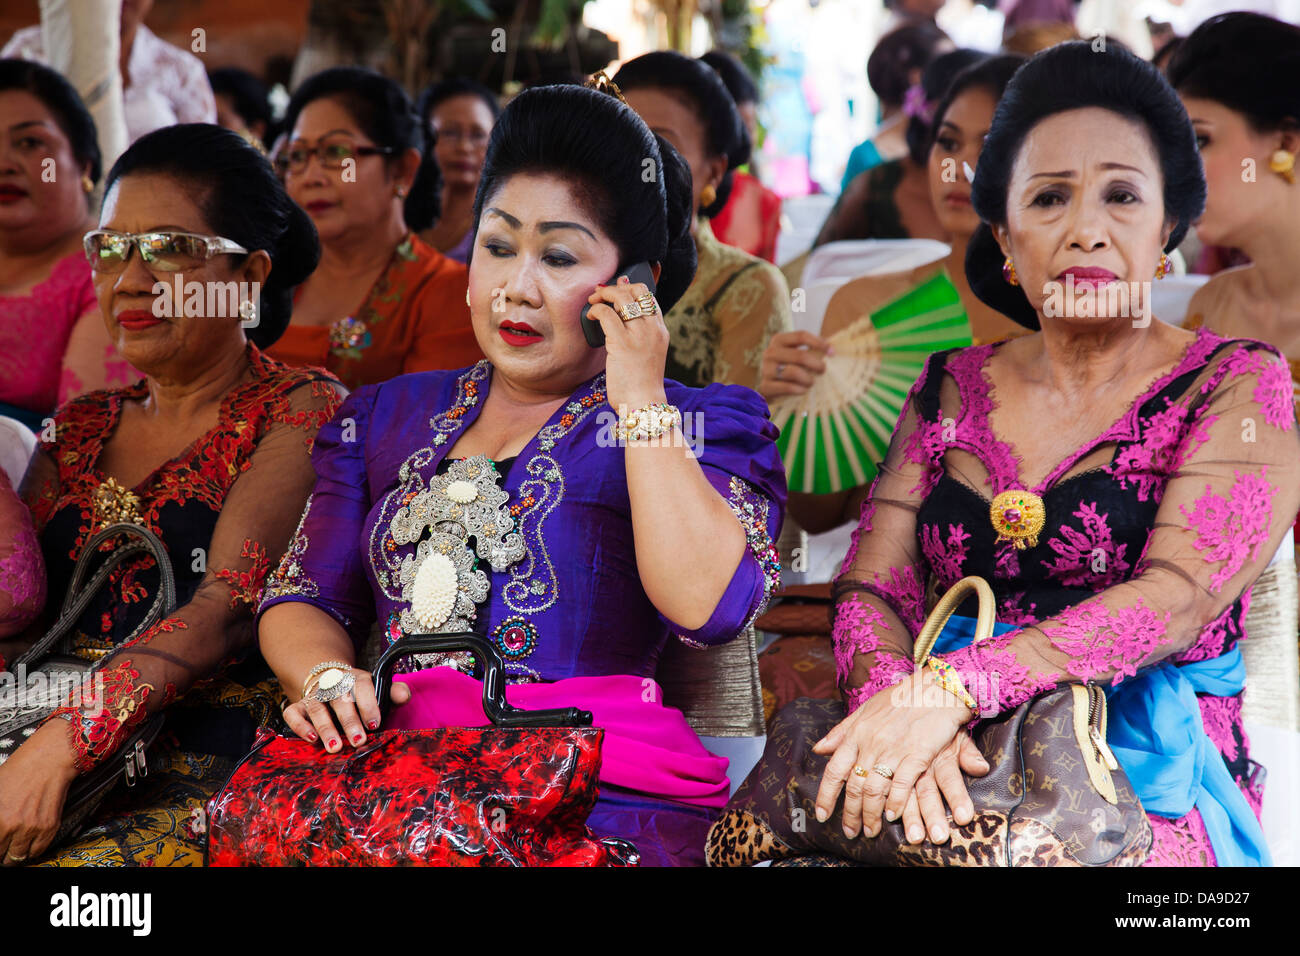 Guests at a Balinese wedding Stock Photo